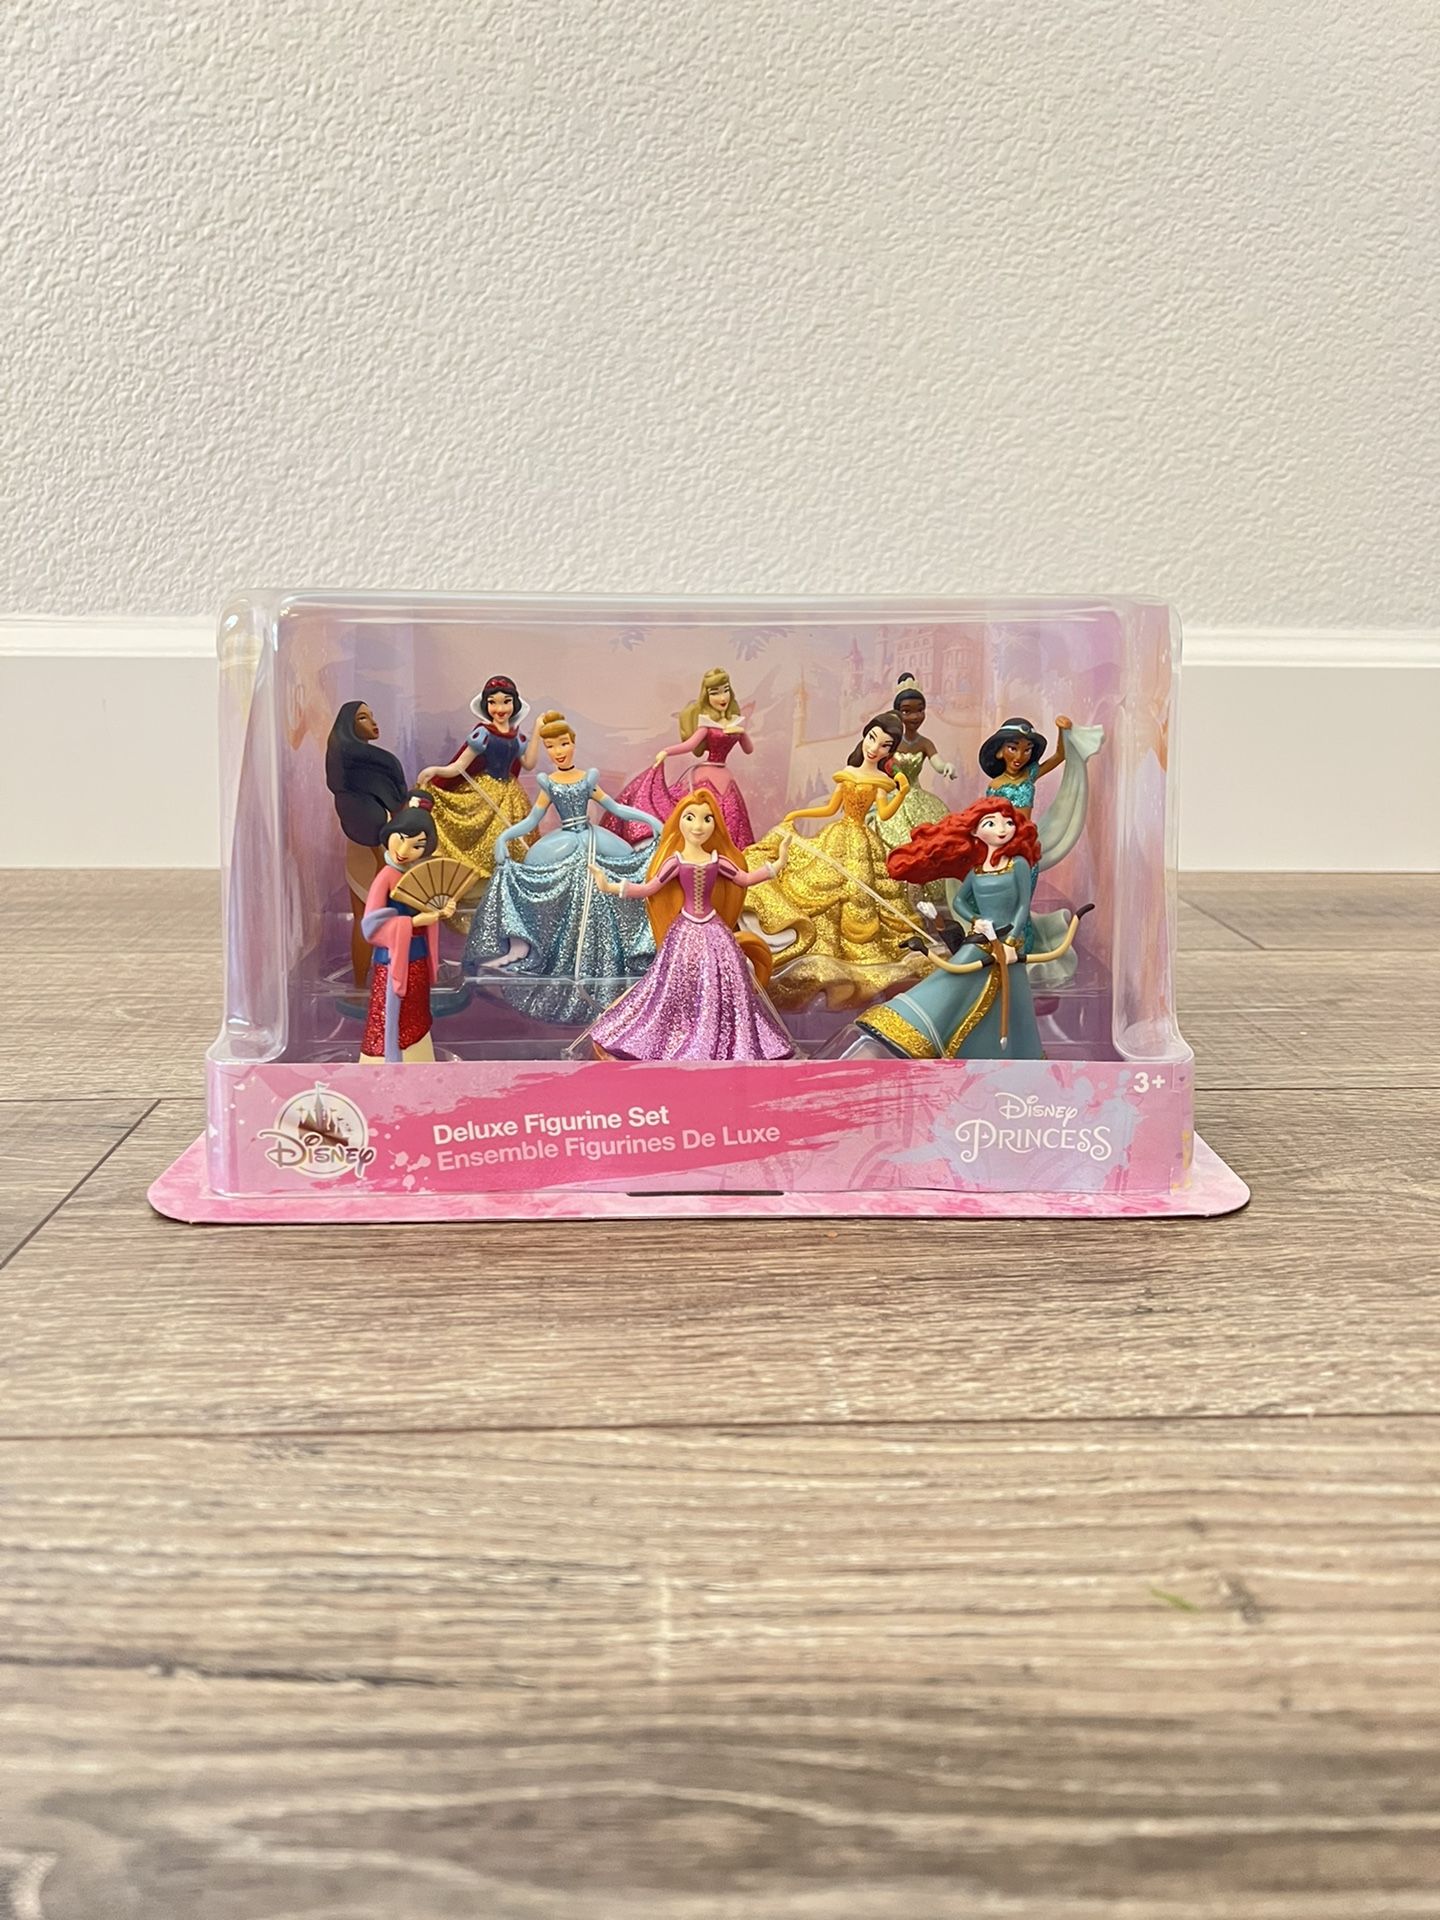 Disney Princess Deluxe Figurine Set